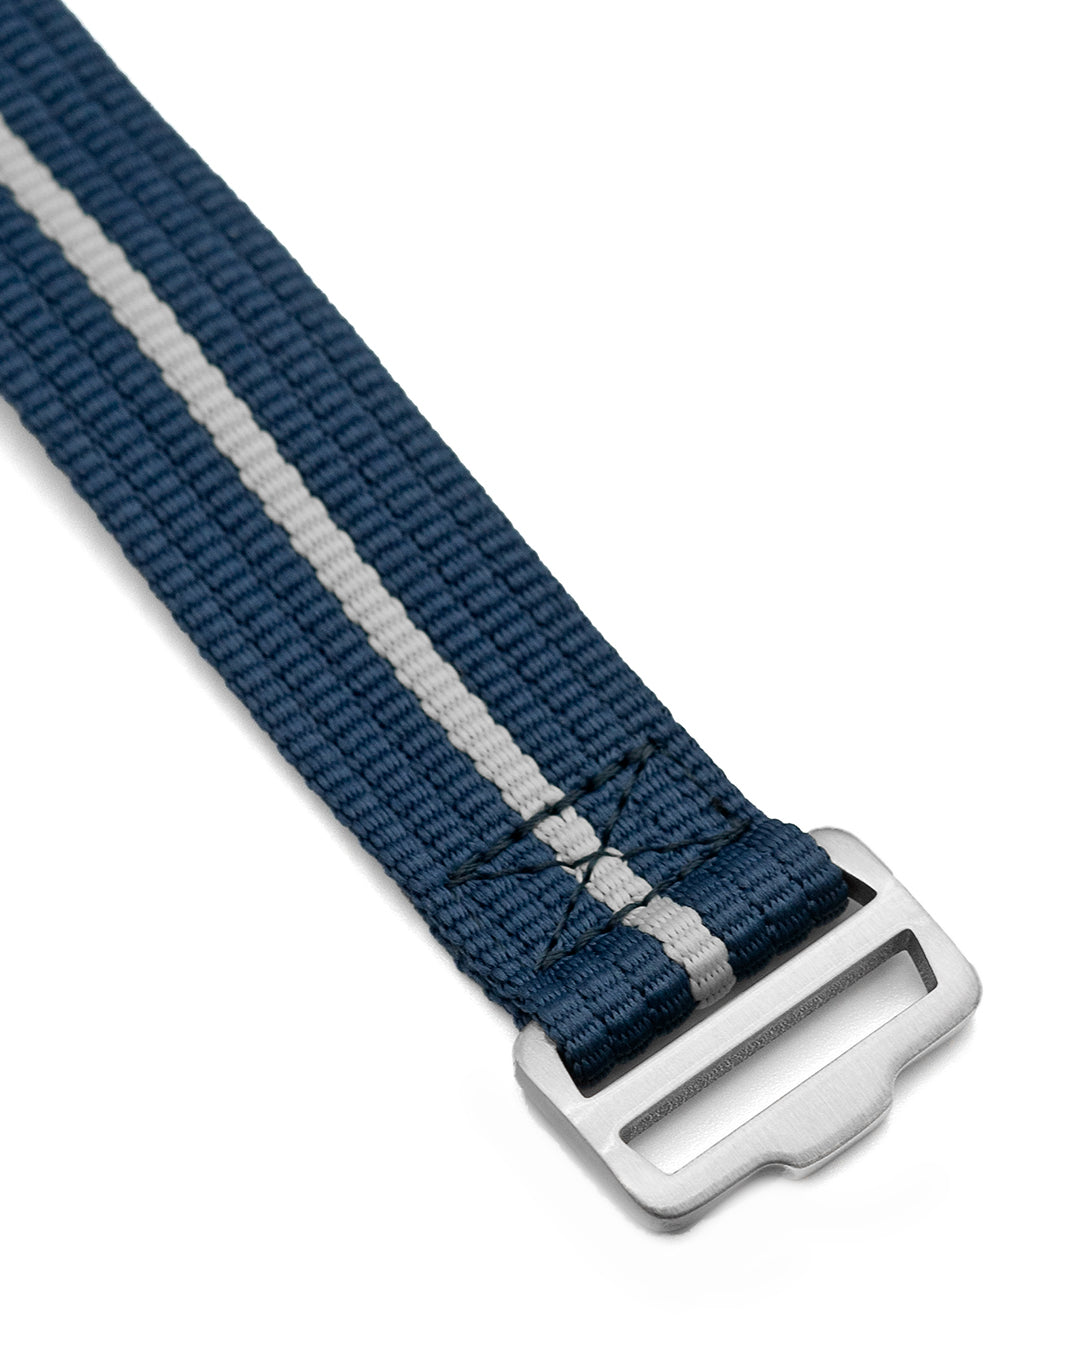 Velcro Premium - Navy with White Stripe